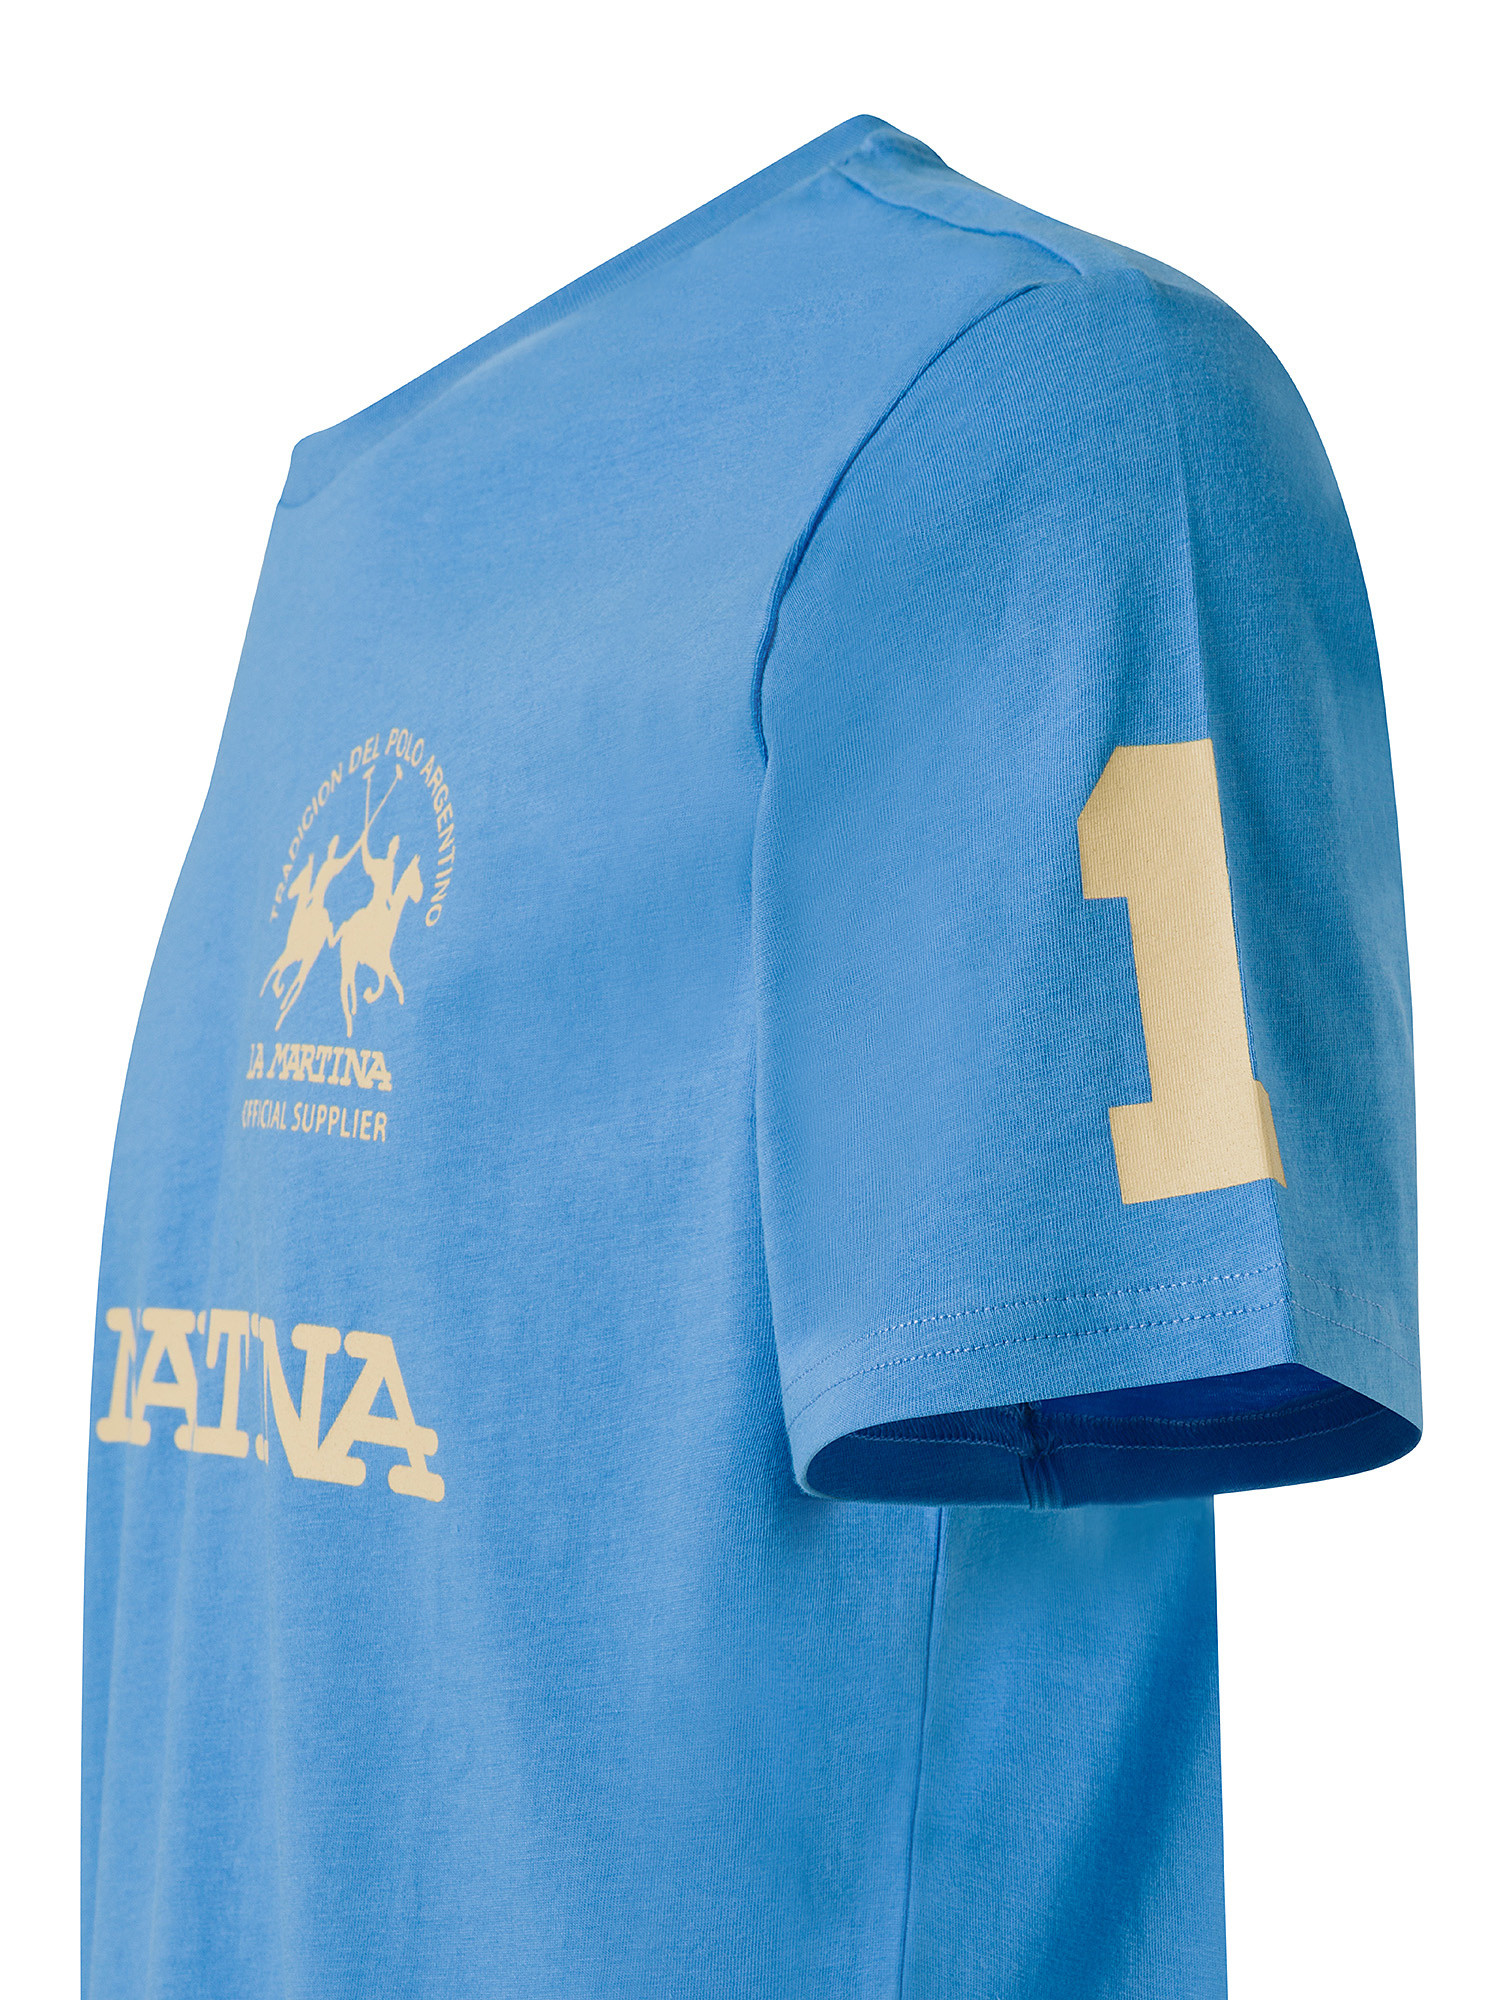 La Martina - Short-sleeved T-shirt in jersey cotton, Blue, large image number 2